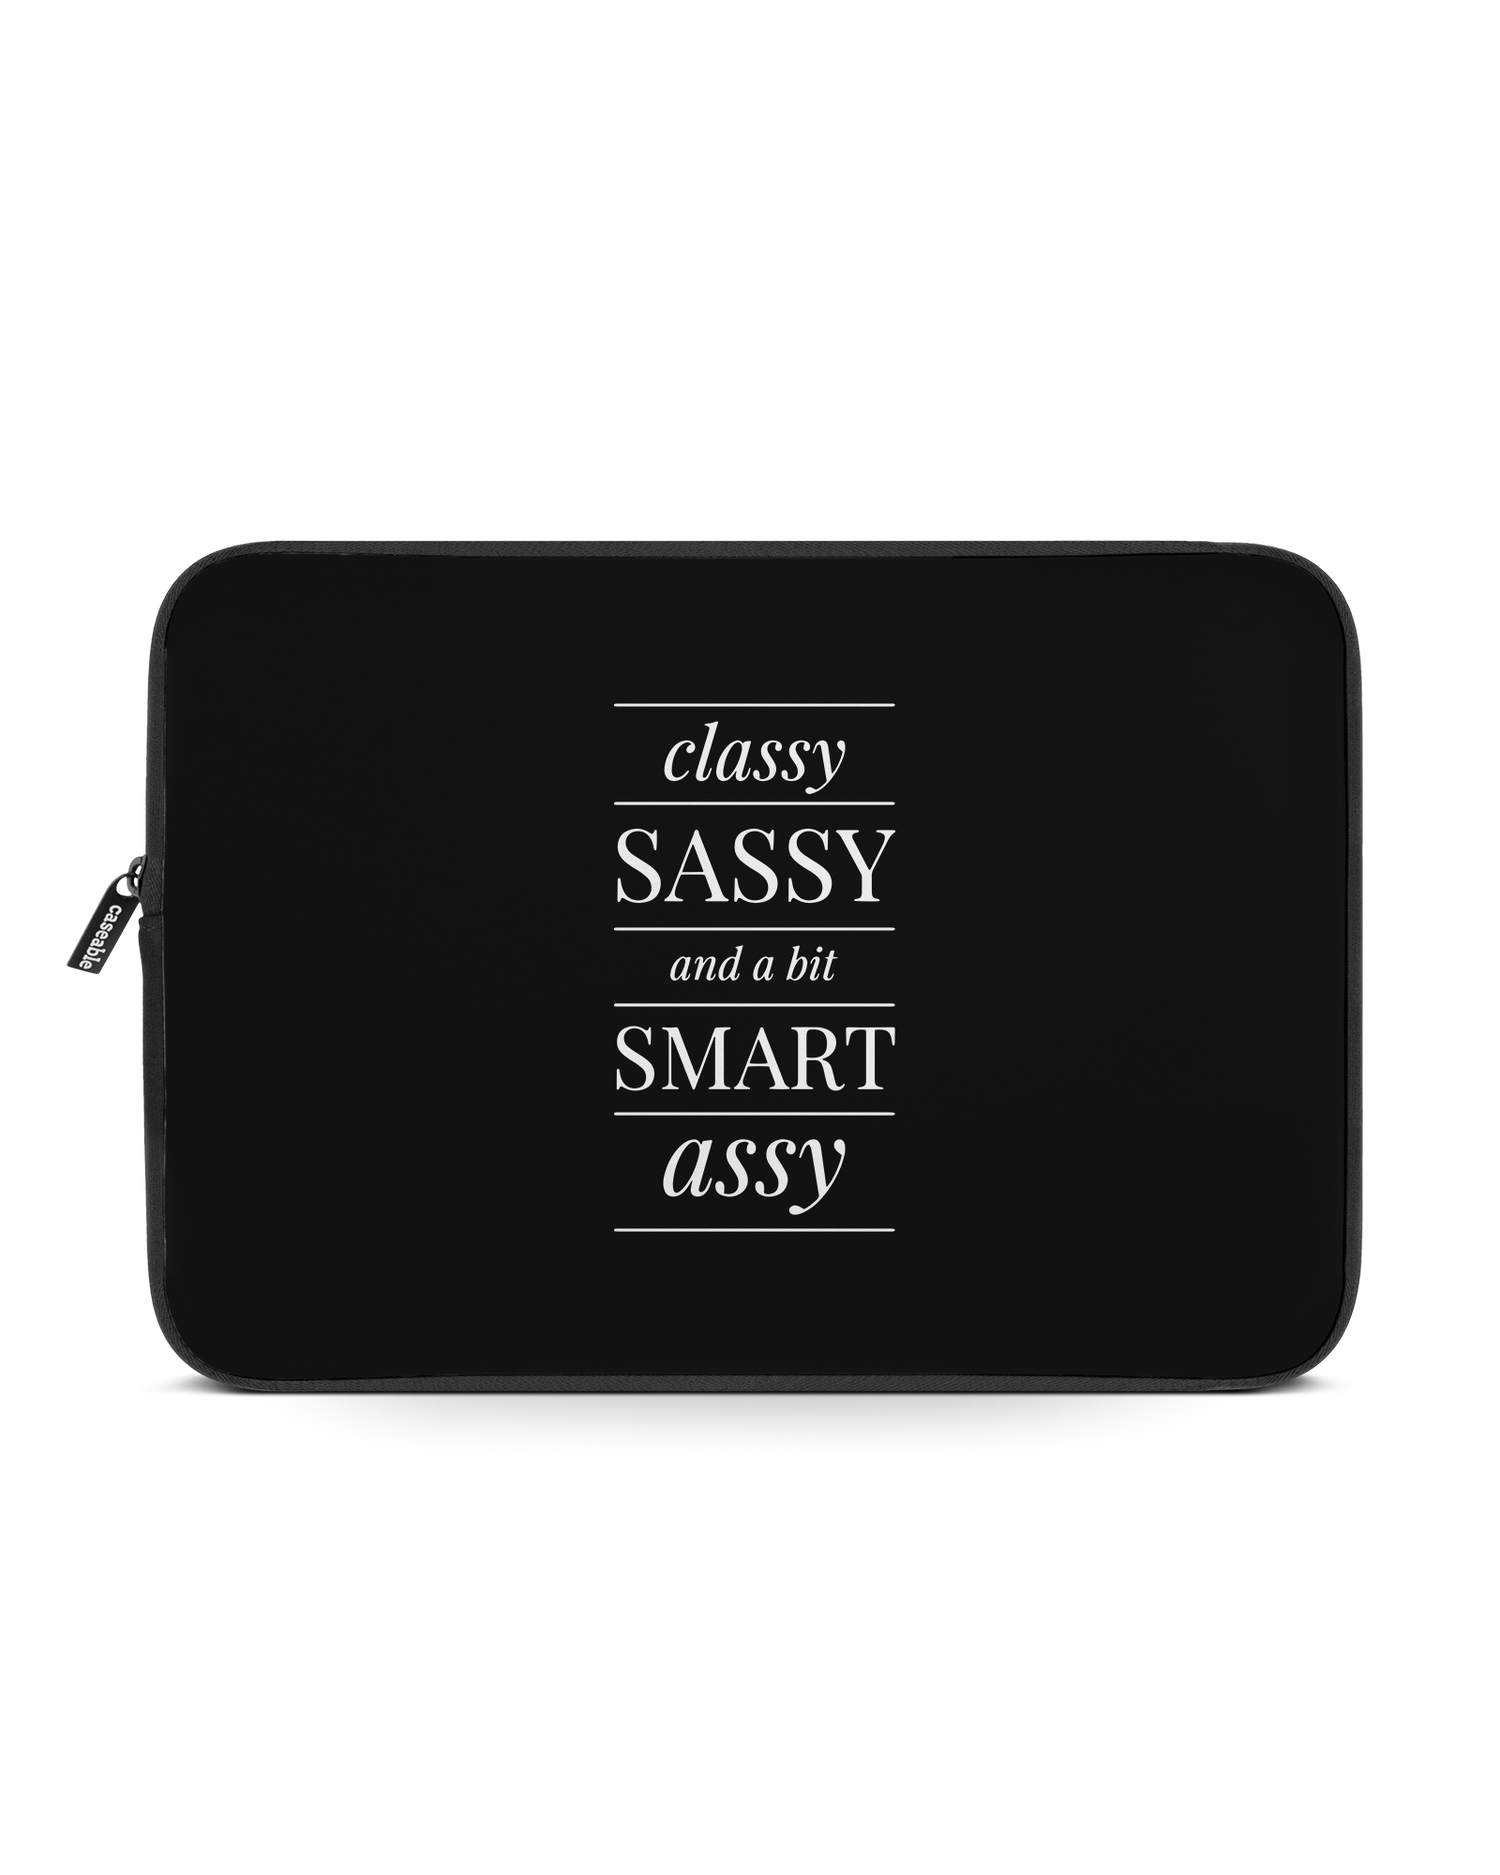 Classy Sassy Laptophülle 15-16 Zoll: Vorderansicht